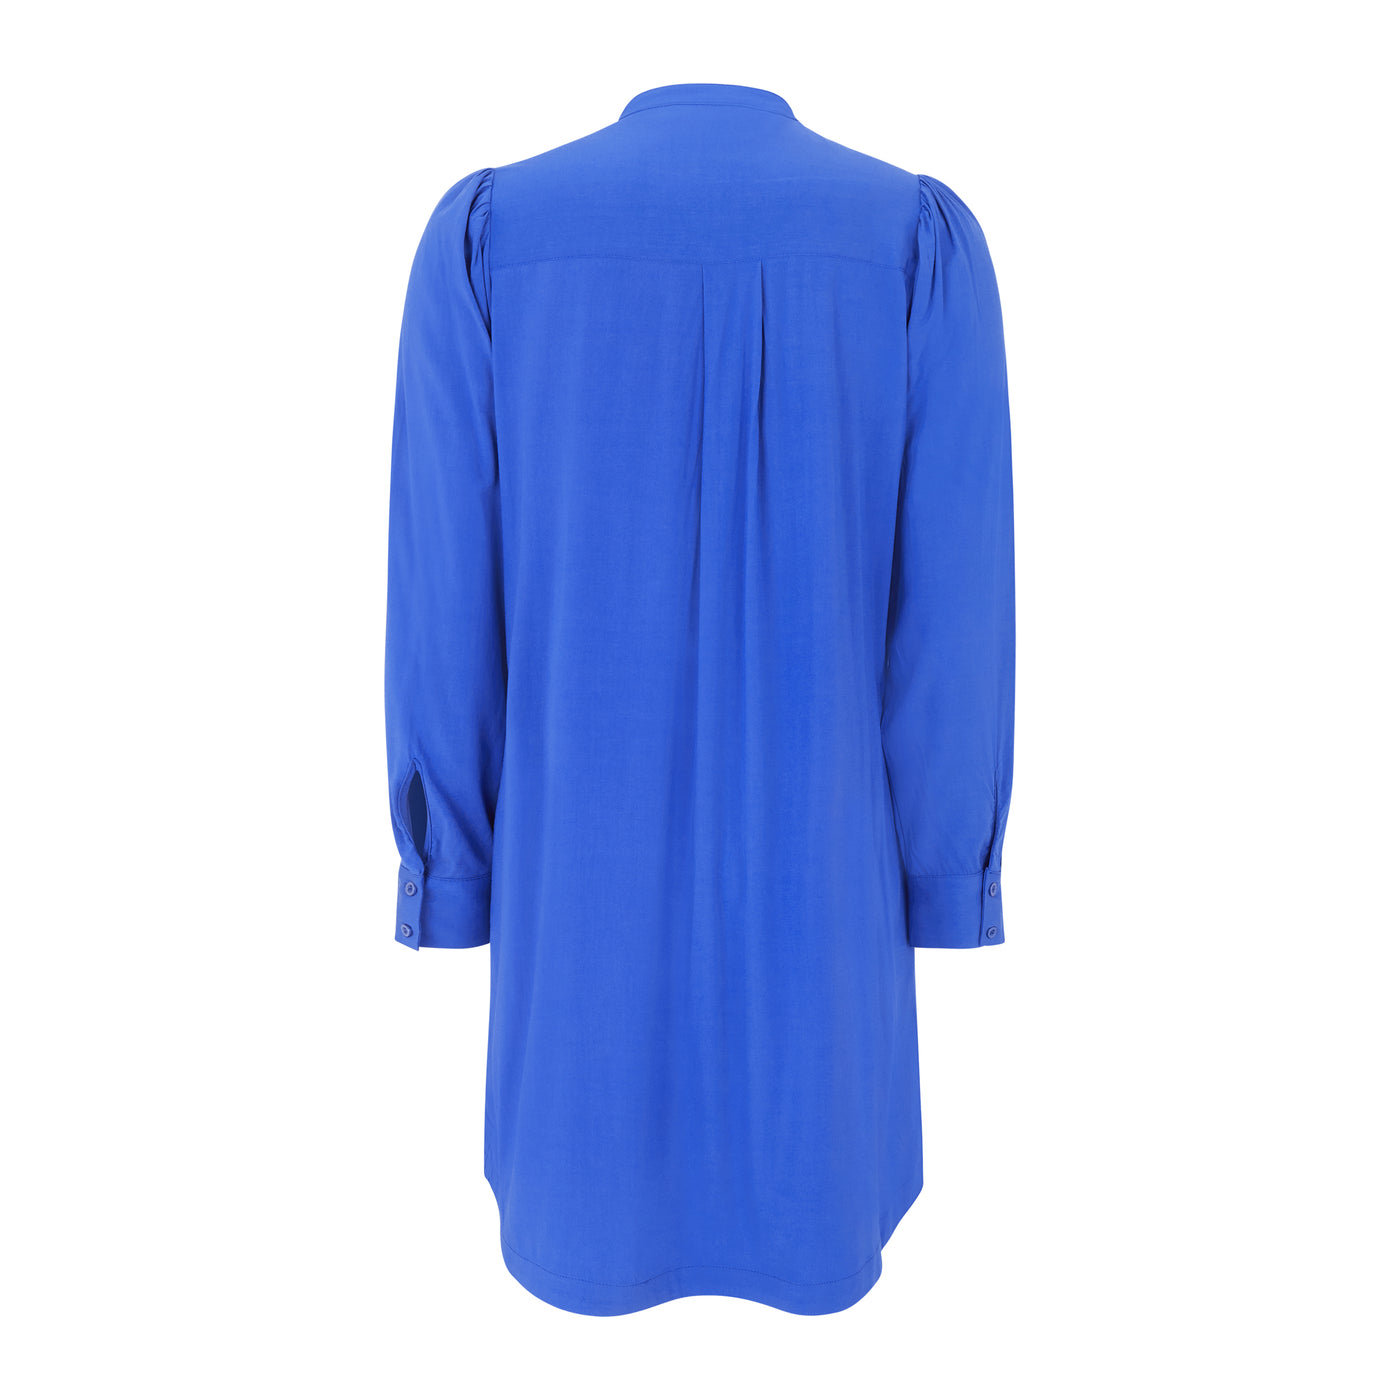 Soft Rebels SRAlia Dress Dresses & jumpsuits 161 Dazzling blue